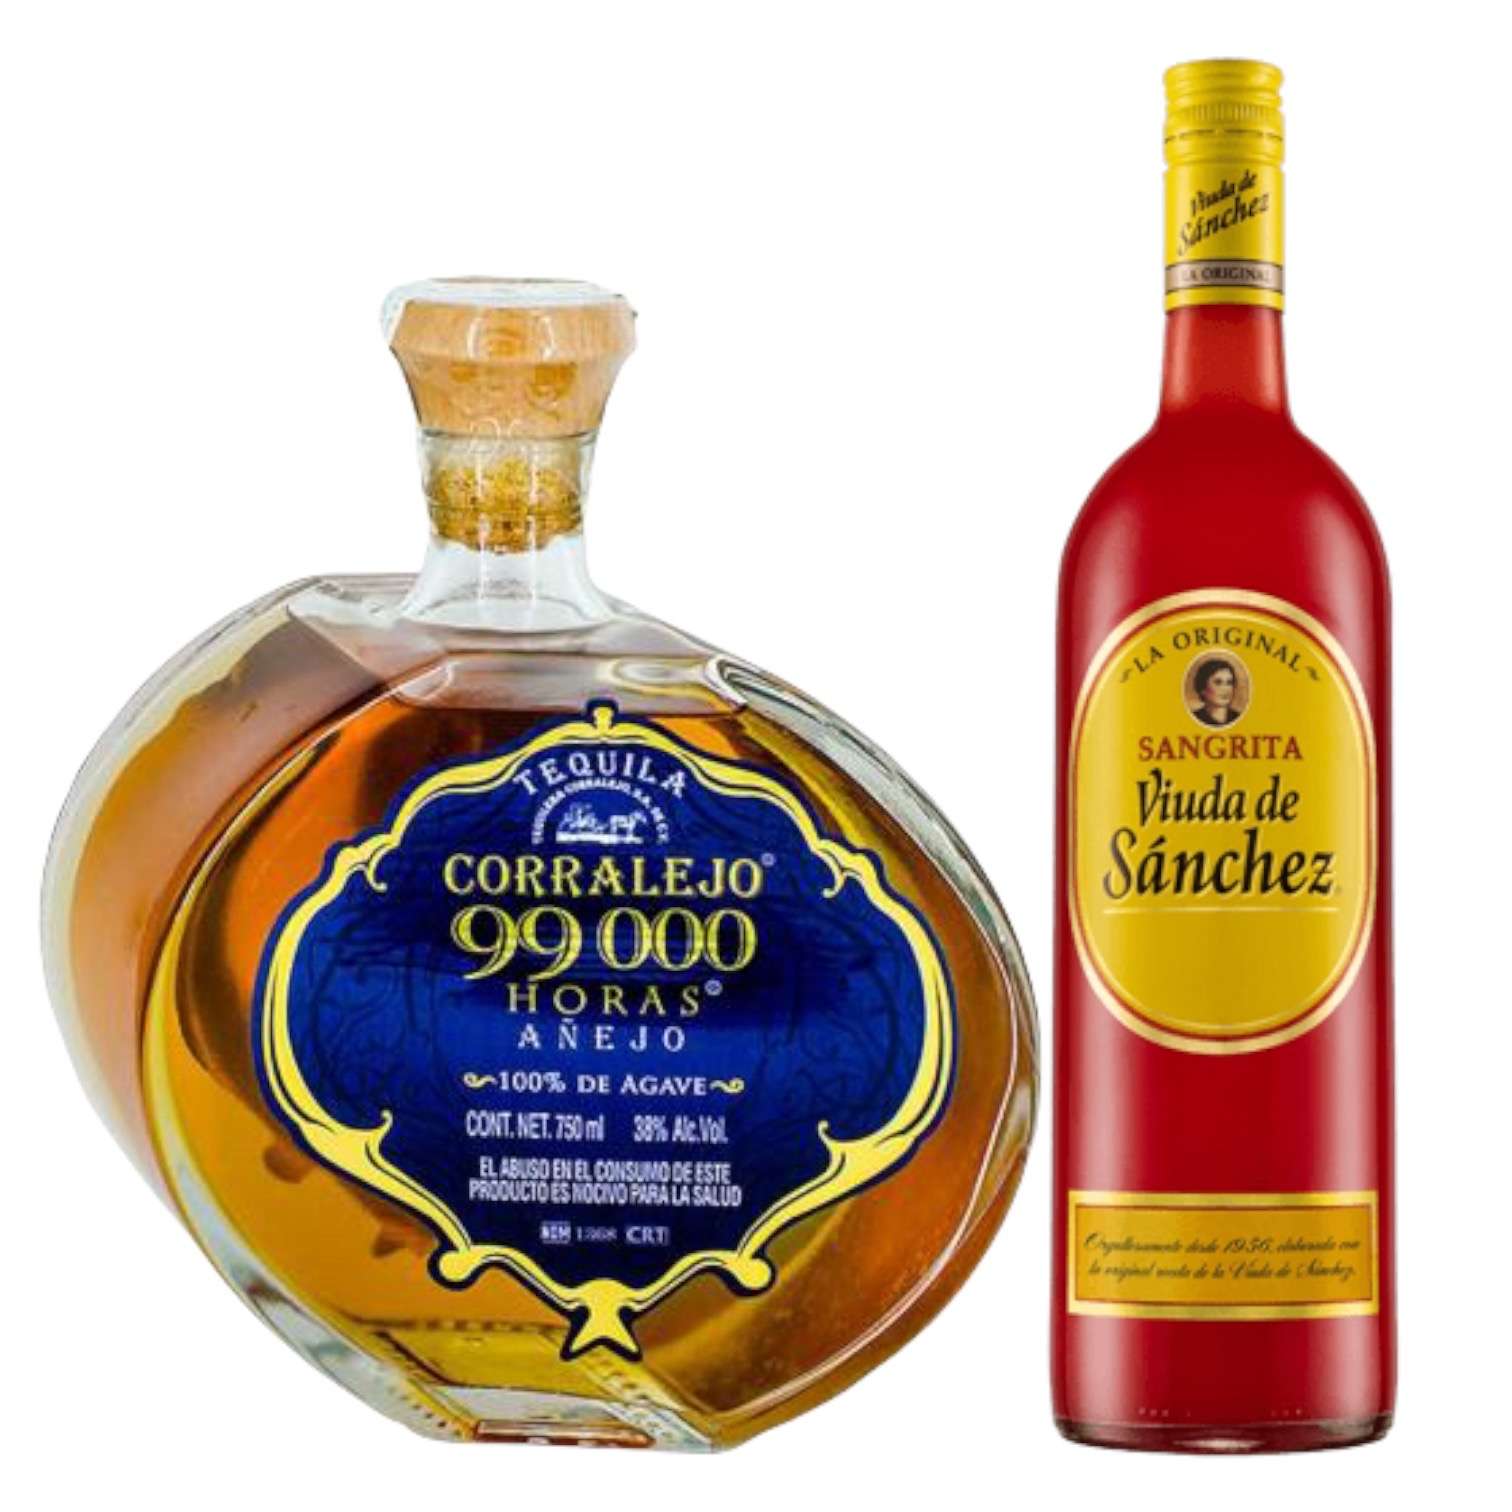 Tequila Corralejo ml+ - Litro Sangrita Añejo Guatemala GuateSelectos Horas 99,000 750 